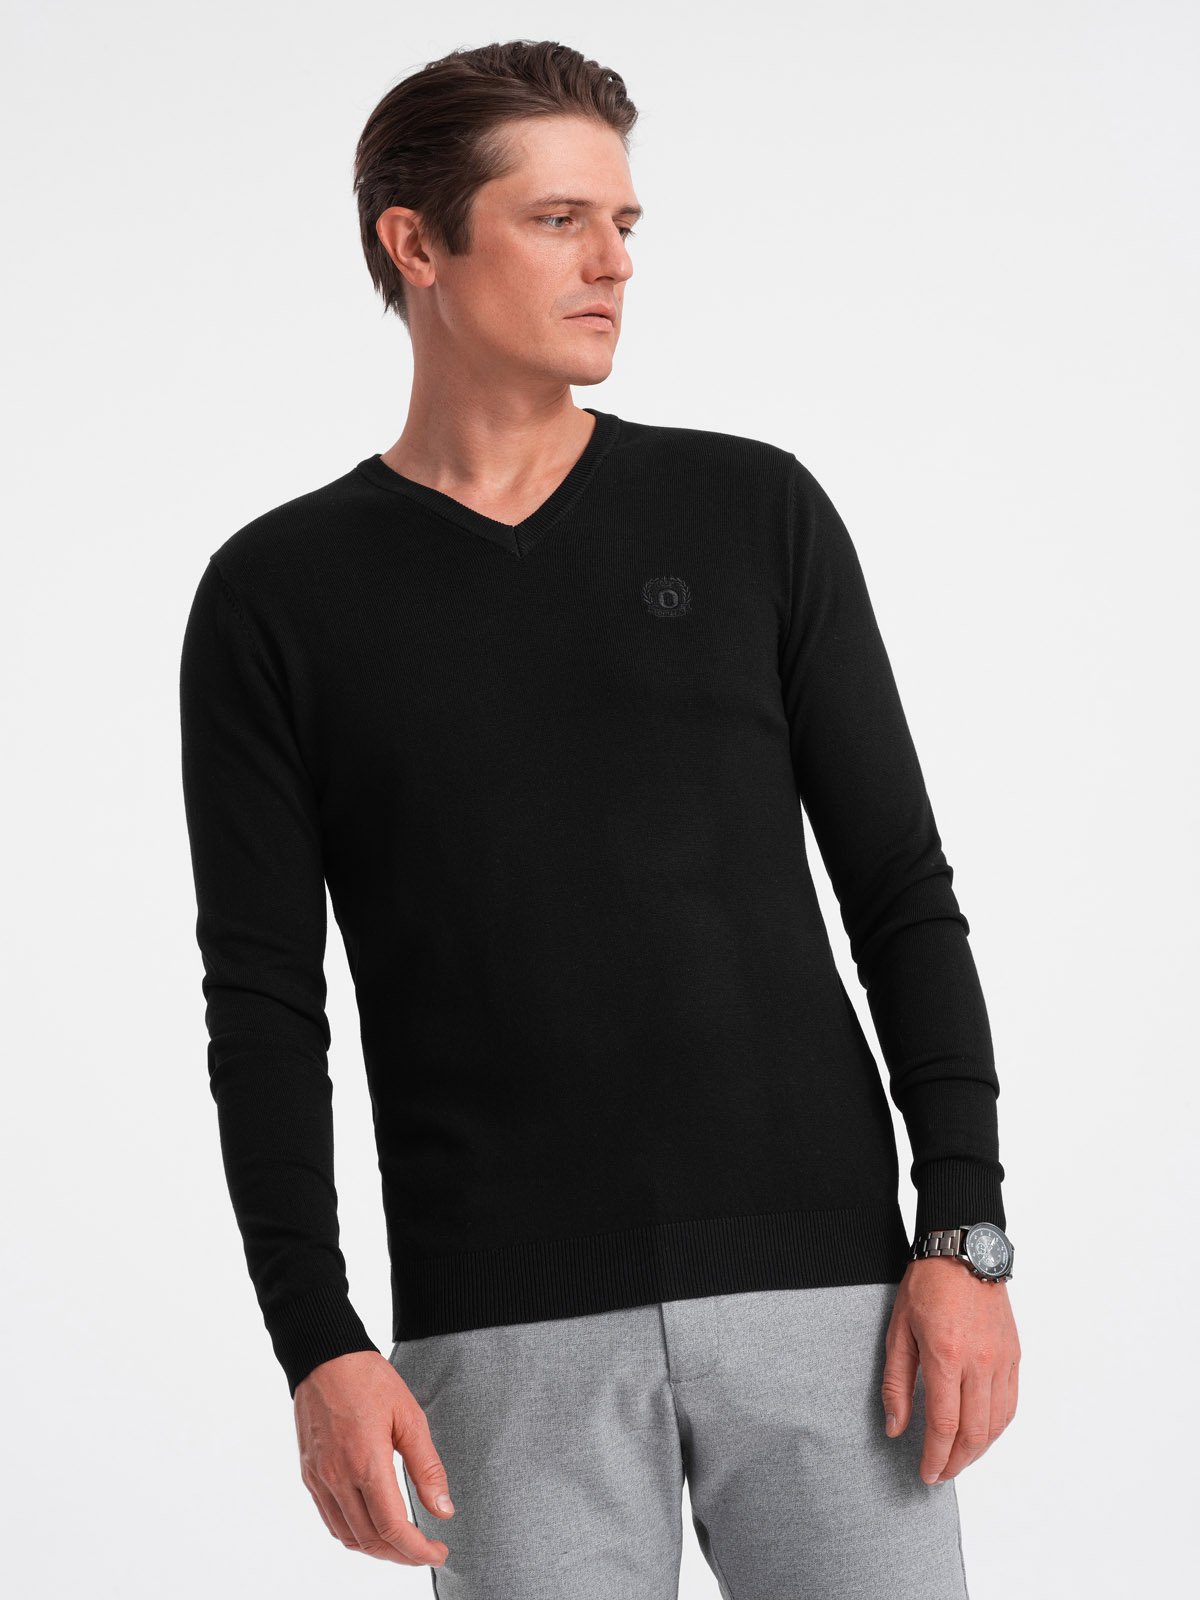 Ombre Elegant men's sweater with a v-neck - black